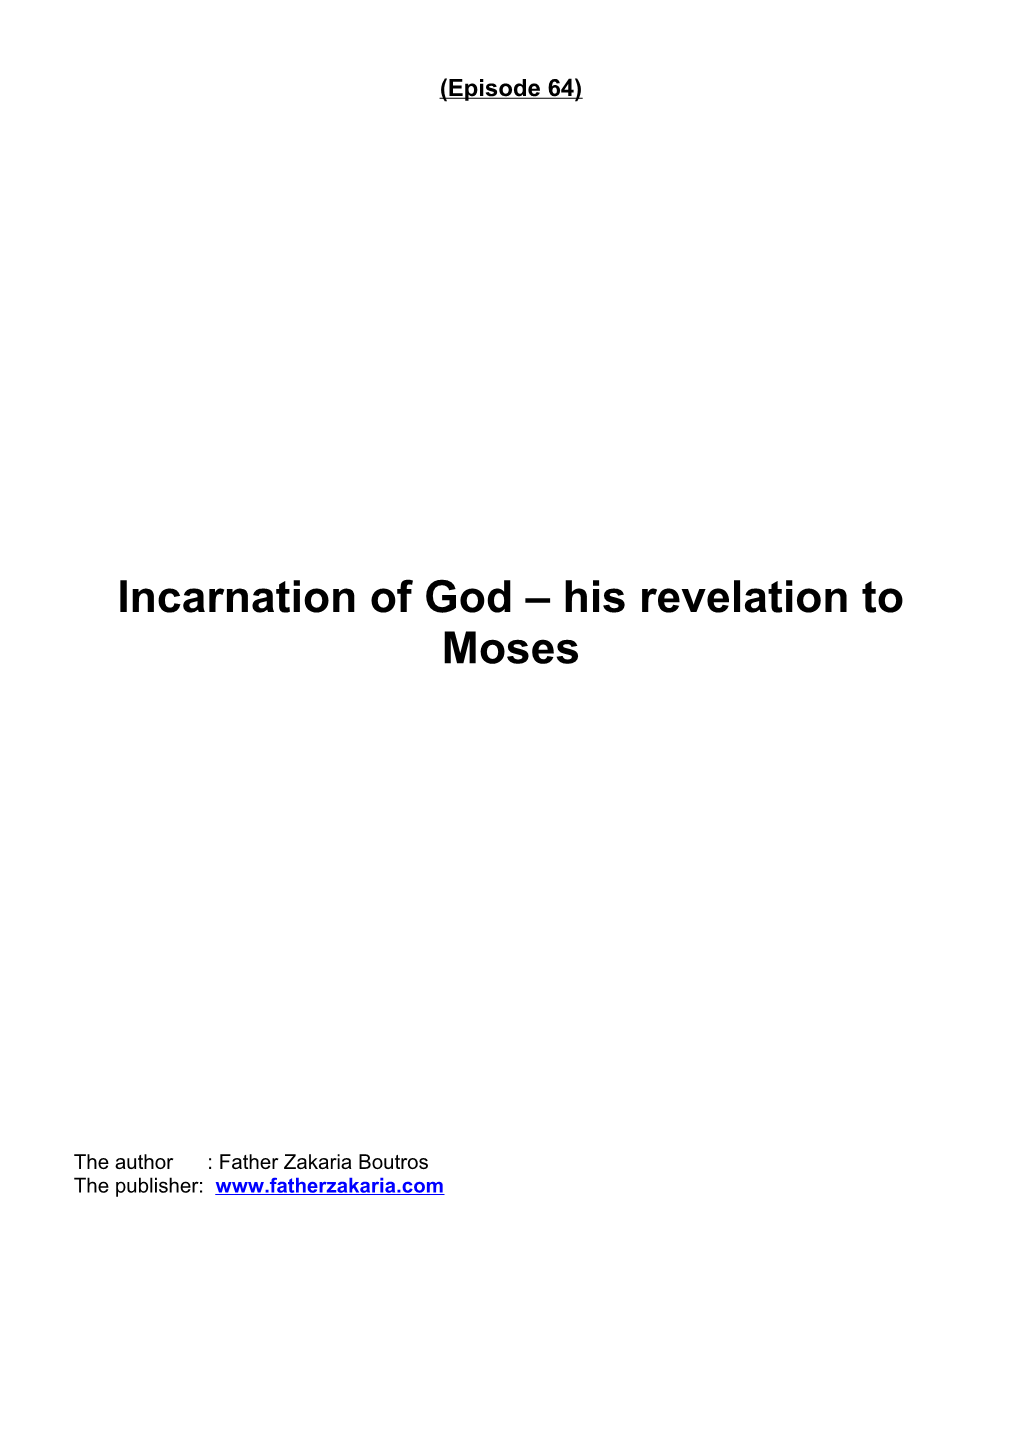 Incarnation of God His Revelation to Moses